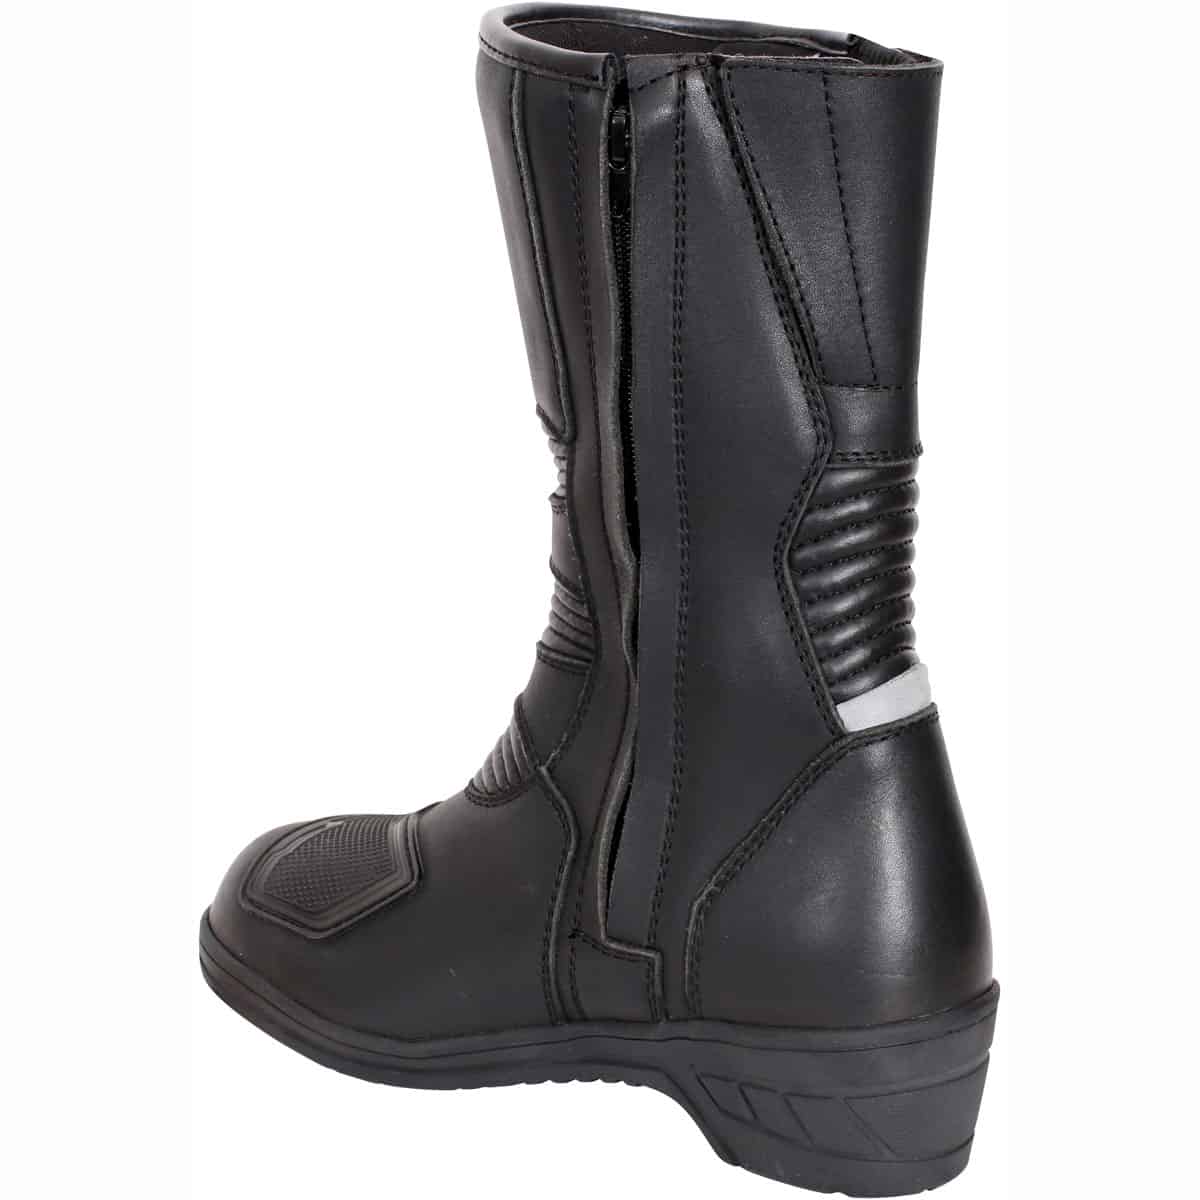 Duchinni Nebula Touring Boots Ladies WP - Black 4